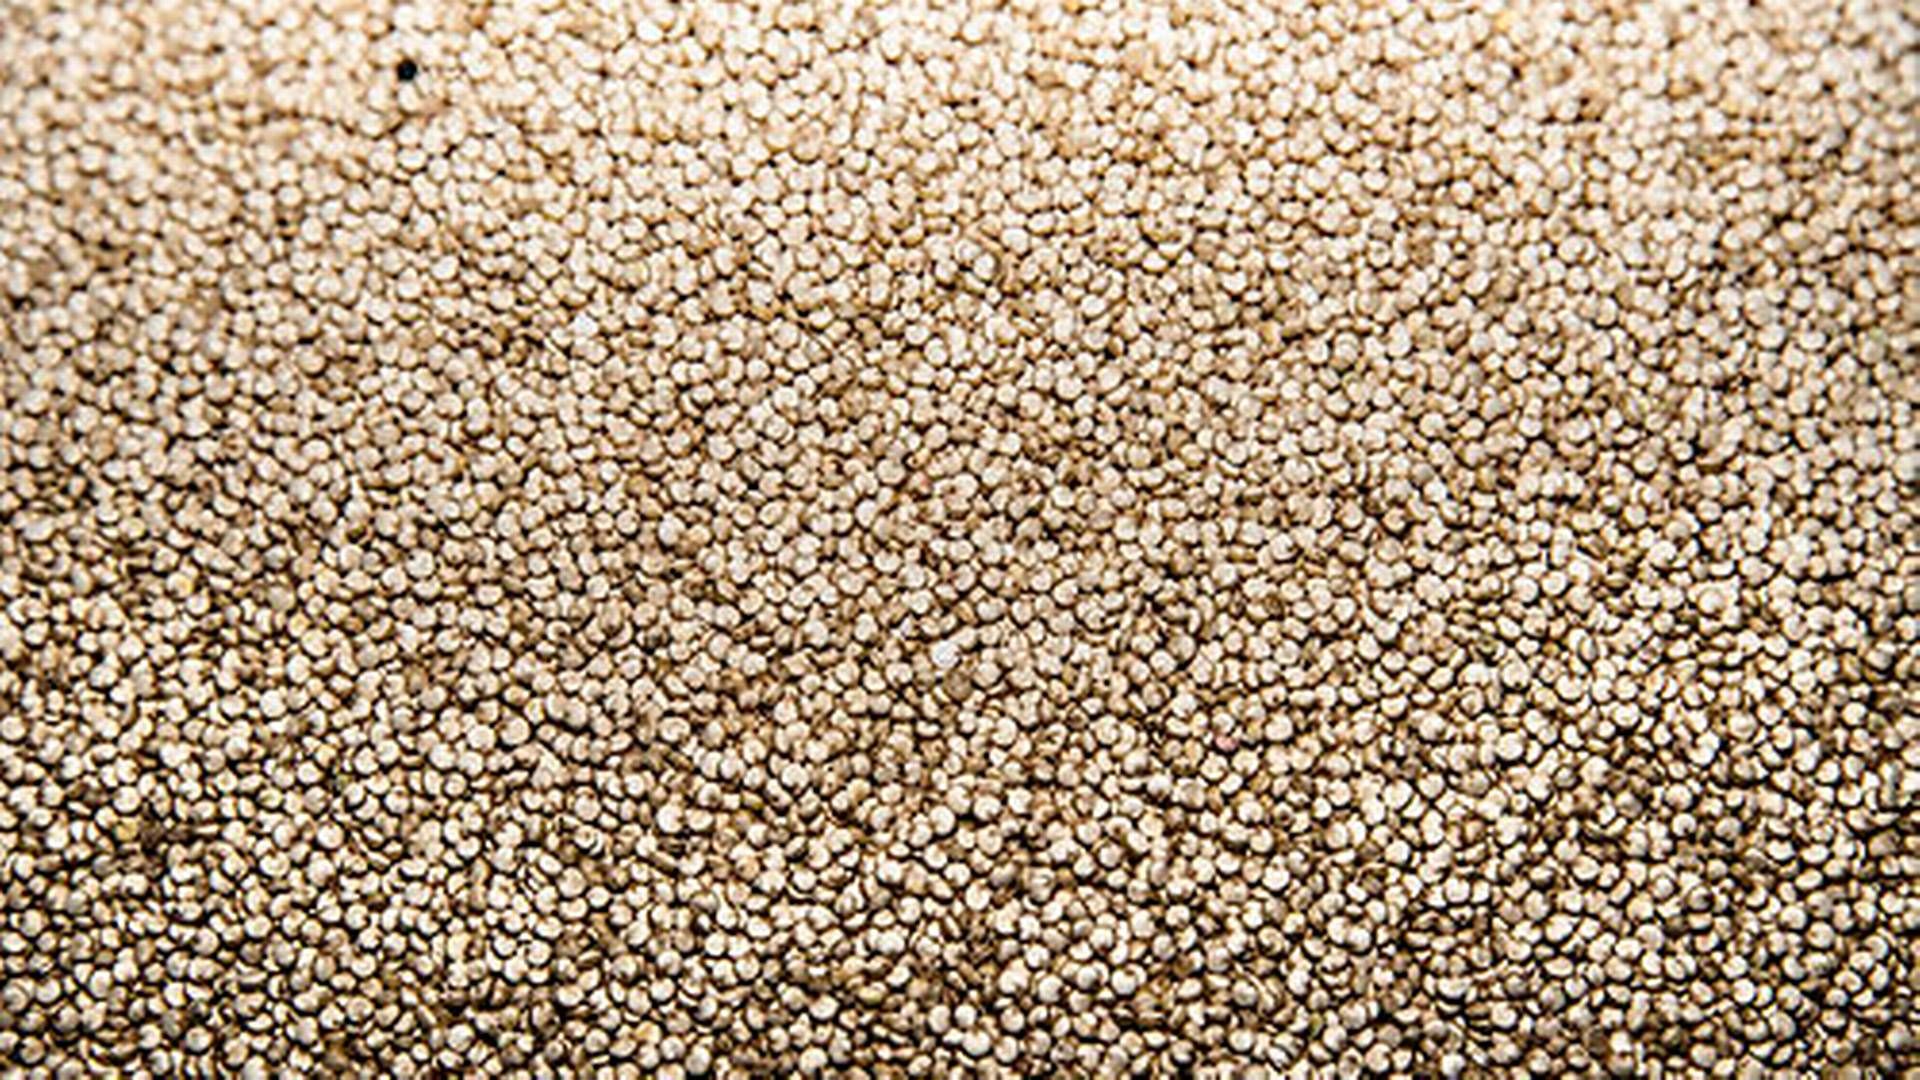 Dansk quinoa har vist sig svært at afsætte. | Foto: Ida Guldbæk Arentsen/Ritzau Scanpix